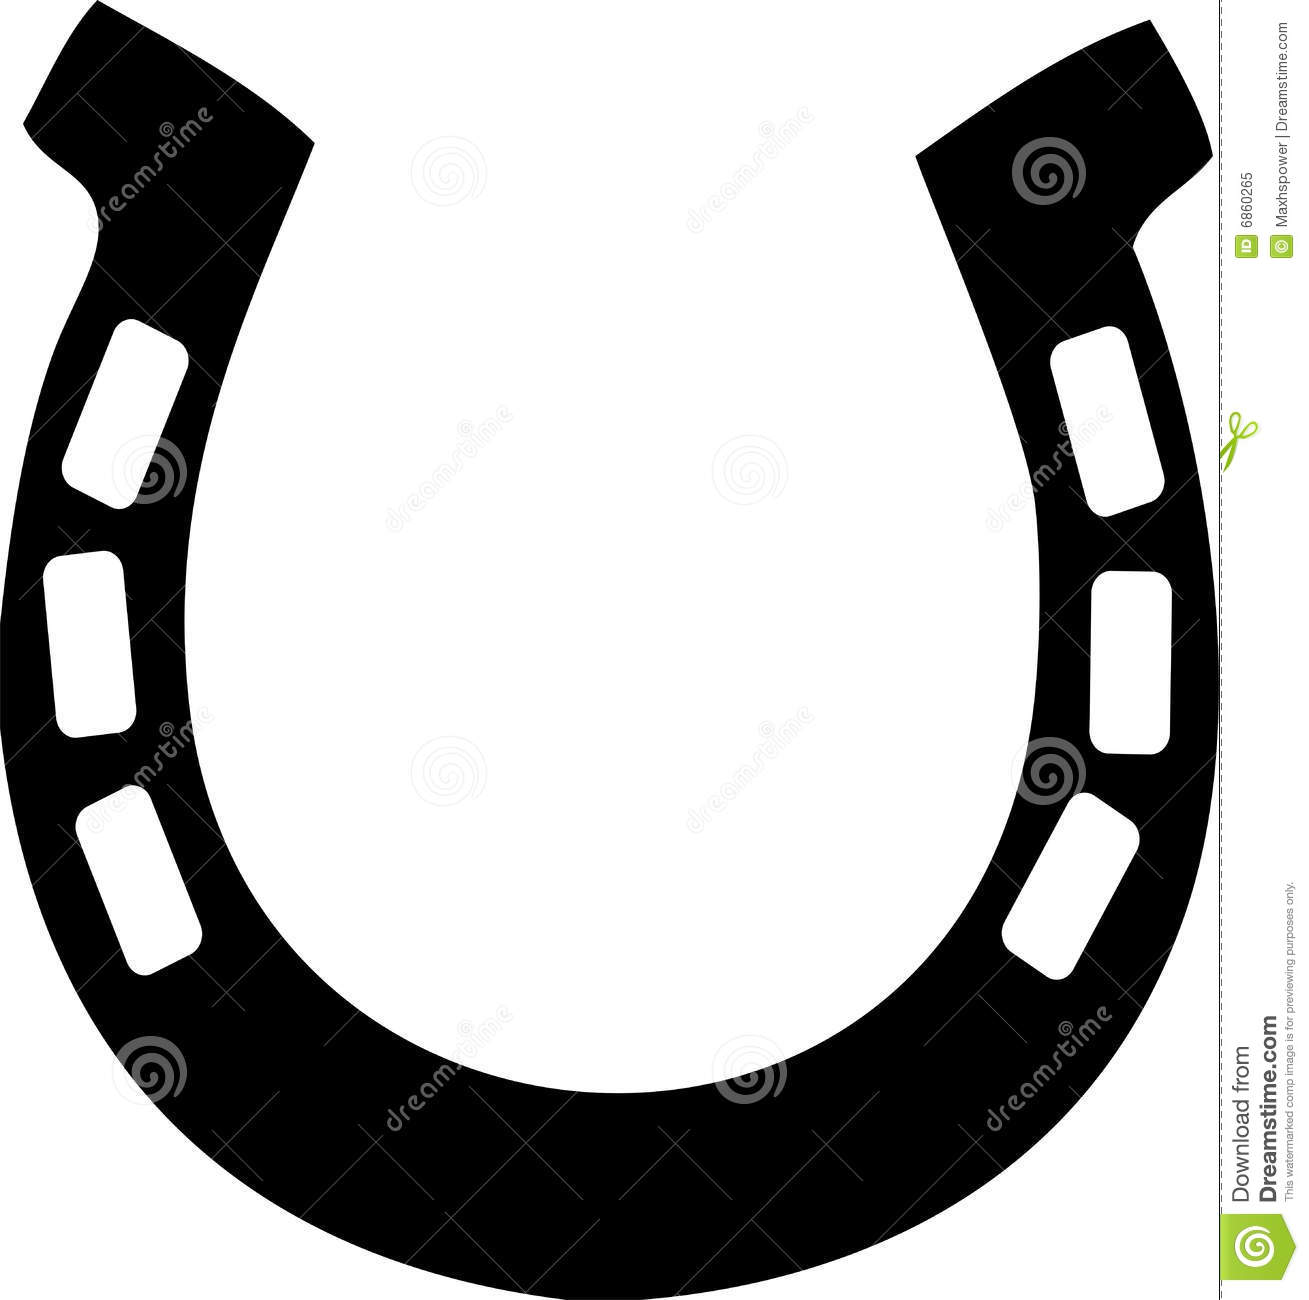 word · horseshoe clipart. Good Luck Horse Shoe Royalty Free Stock Photo Image 6860265